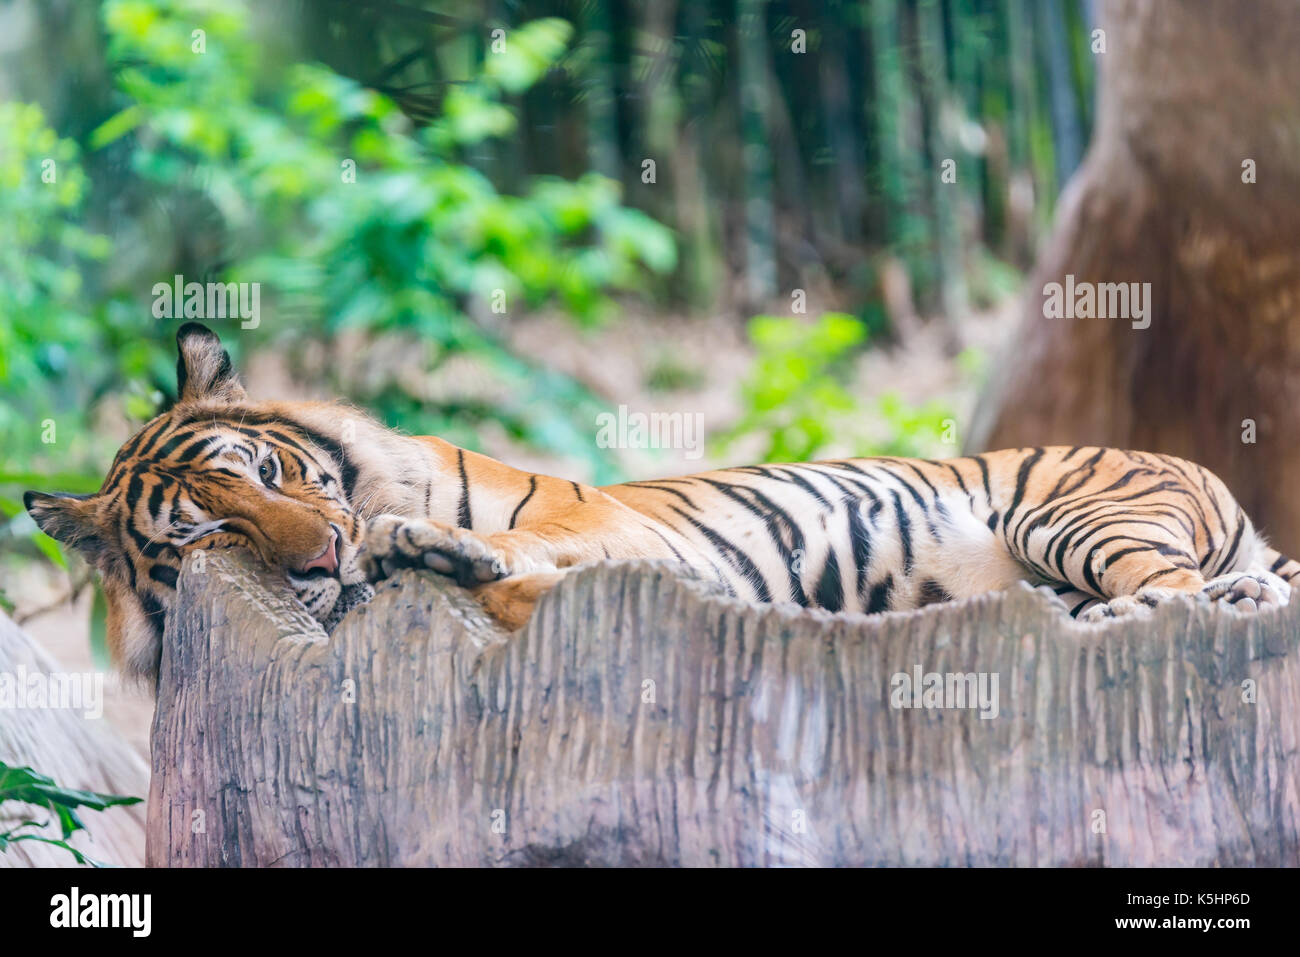 Vignoble en zoo, tiger tiger sur stump, looking at camera Banque D'Images